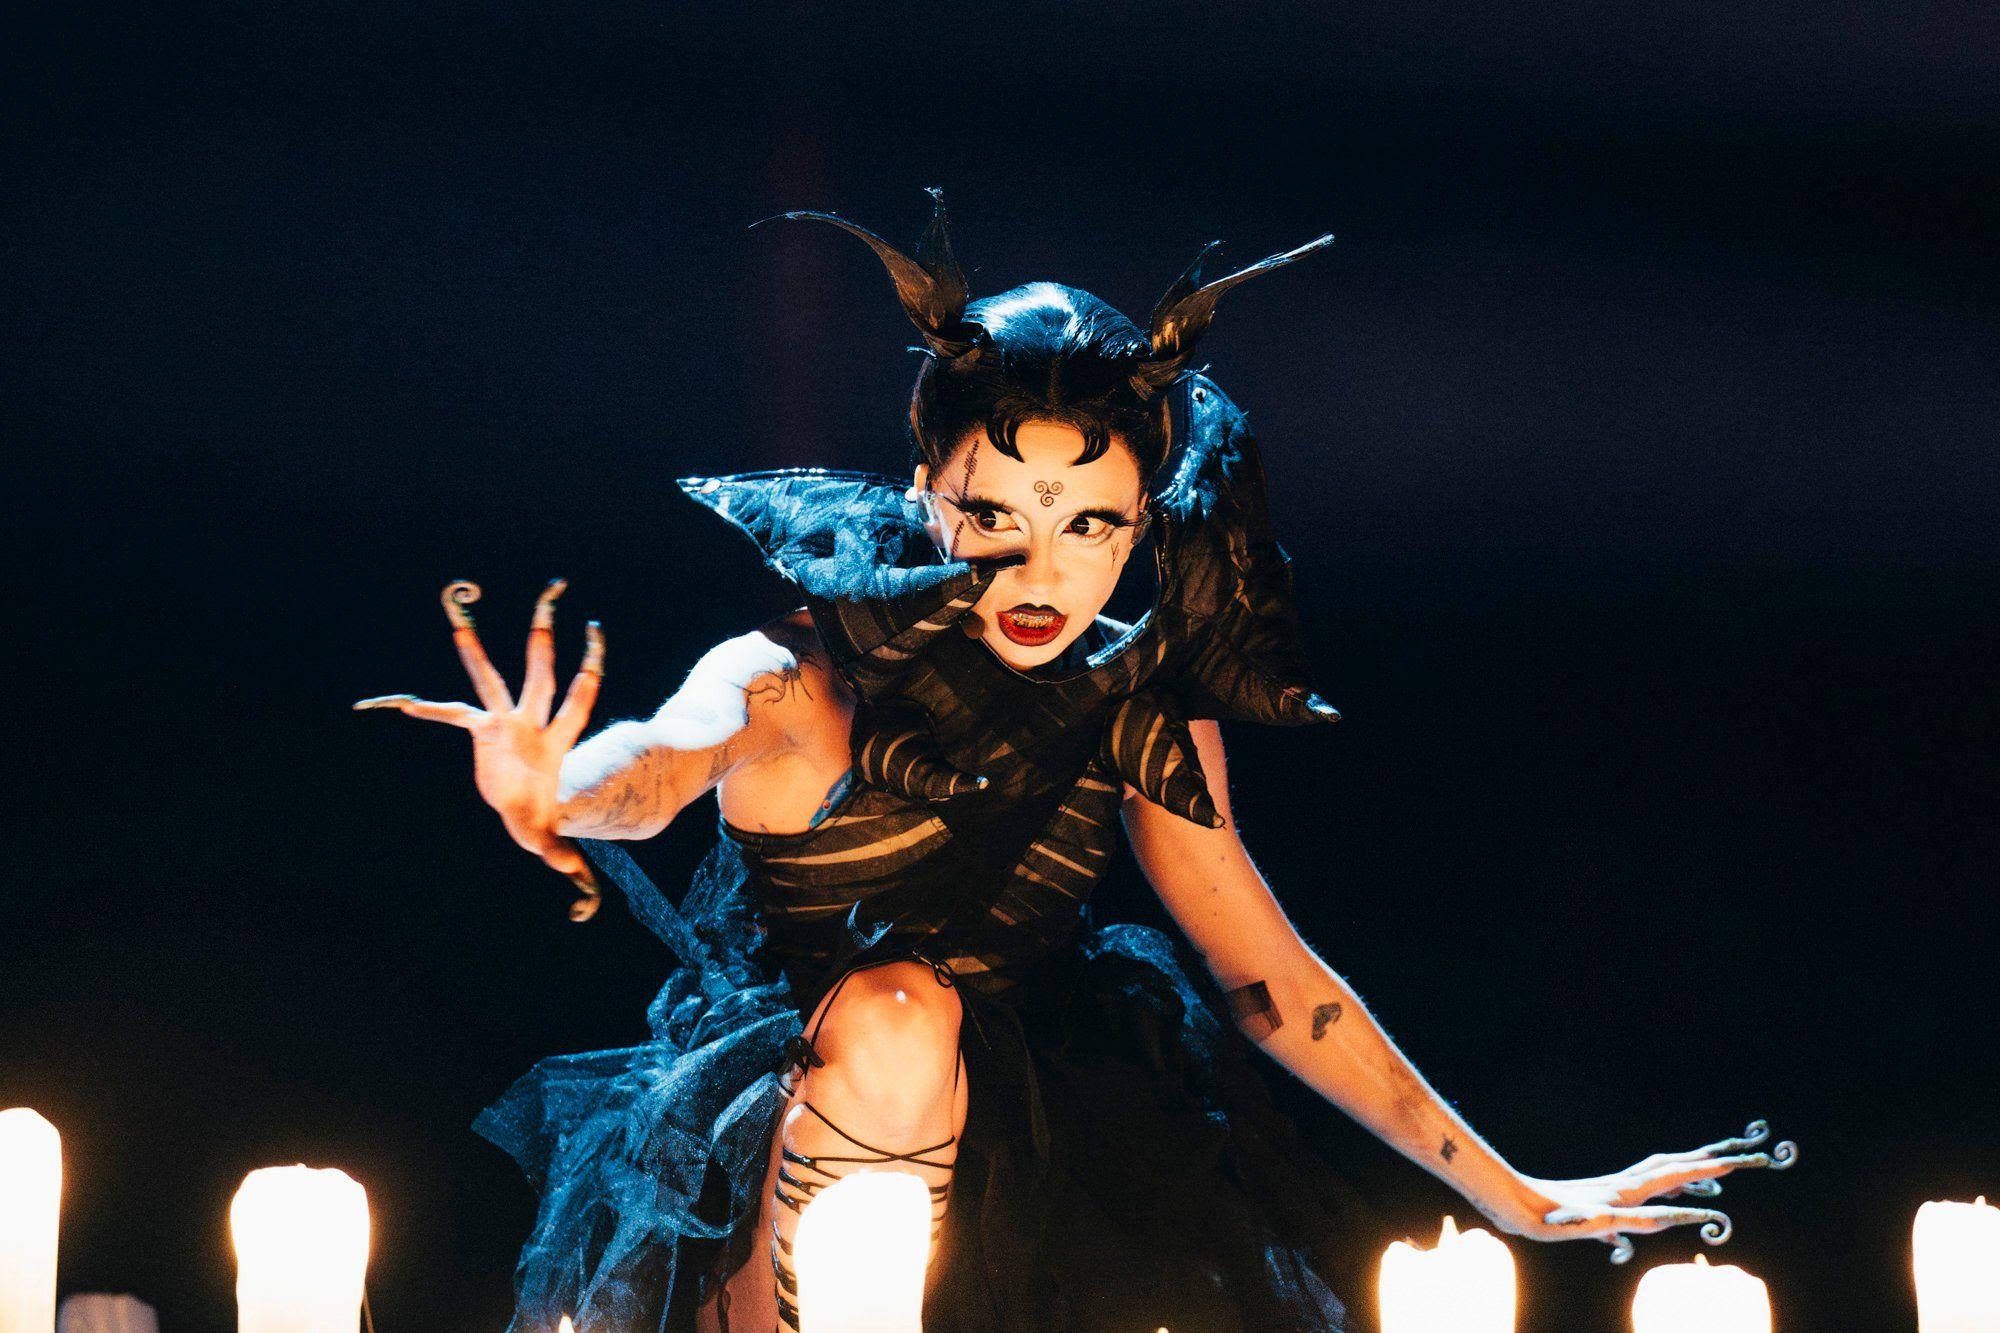 Ireland's goth gremlin through to Eurovision final